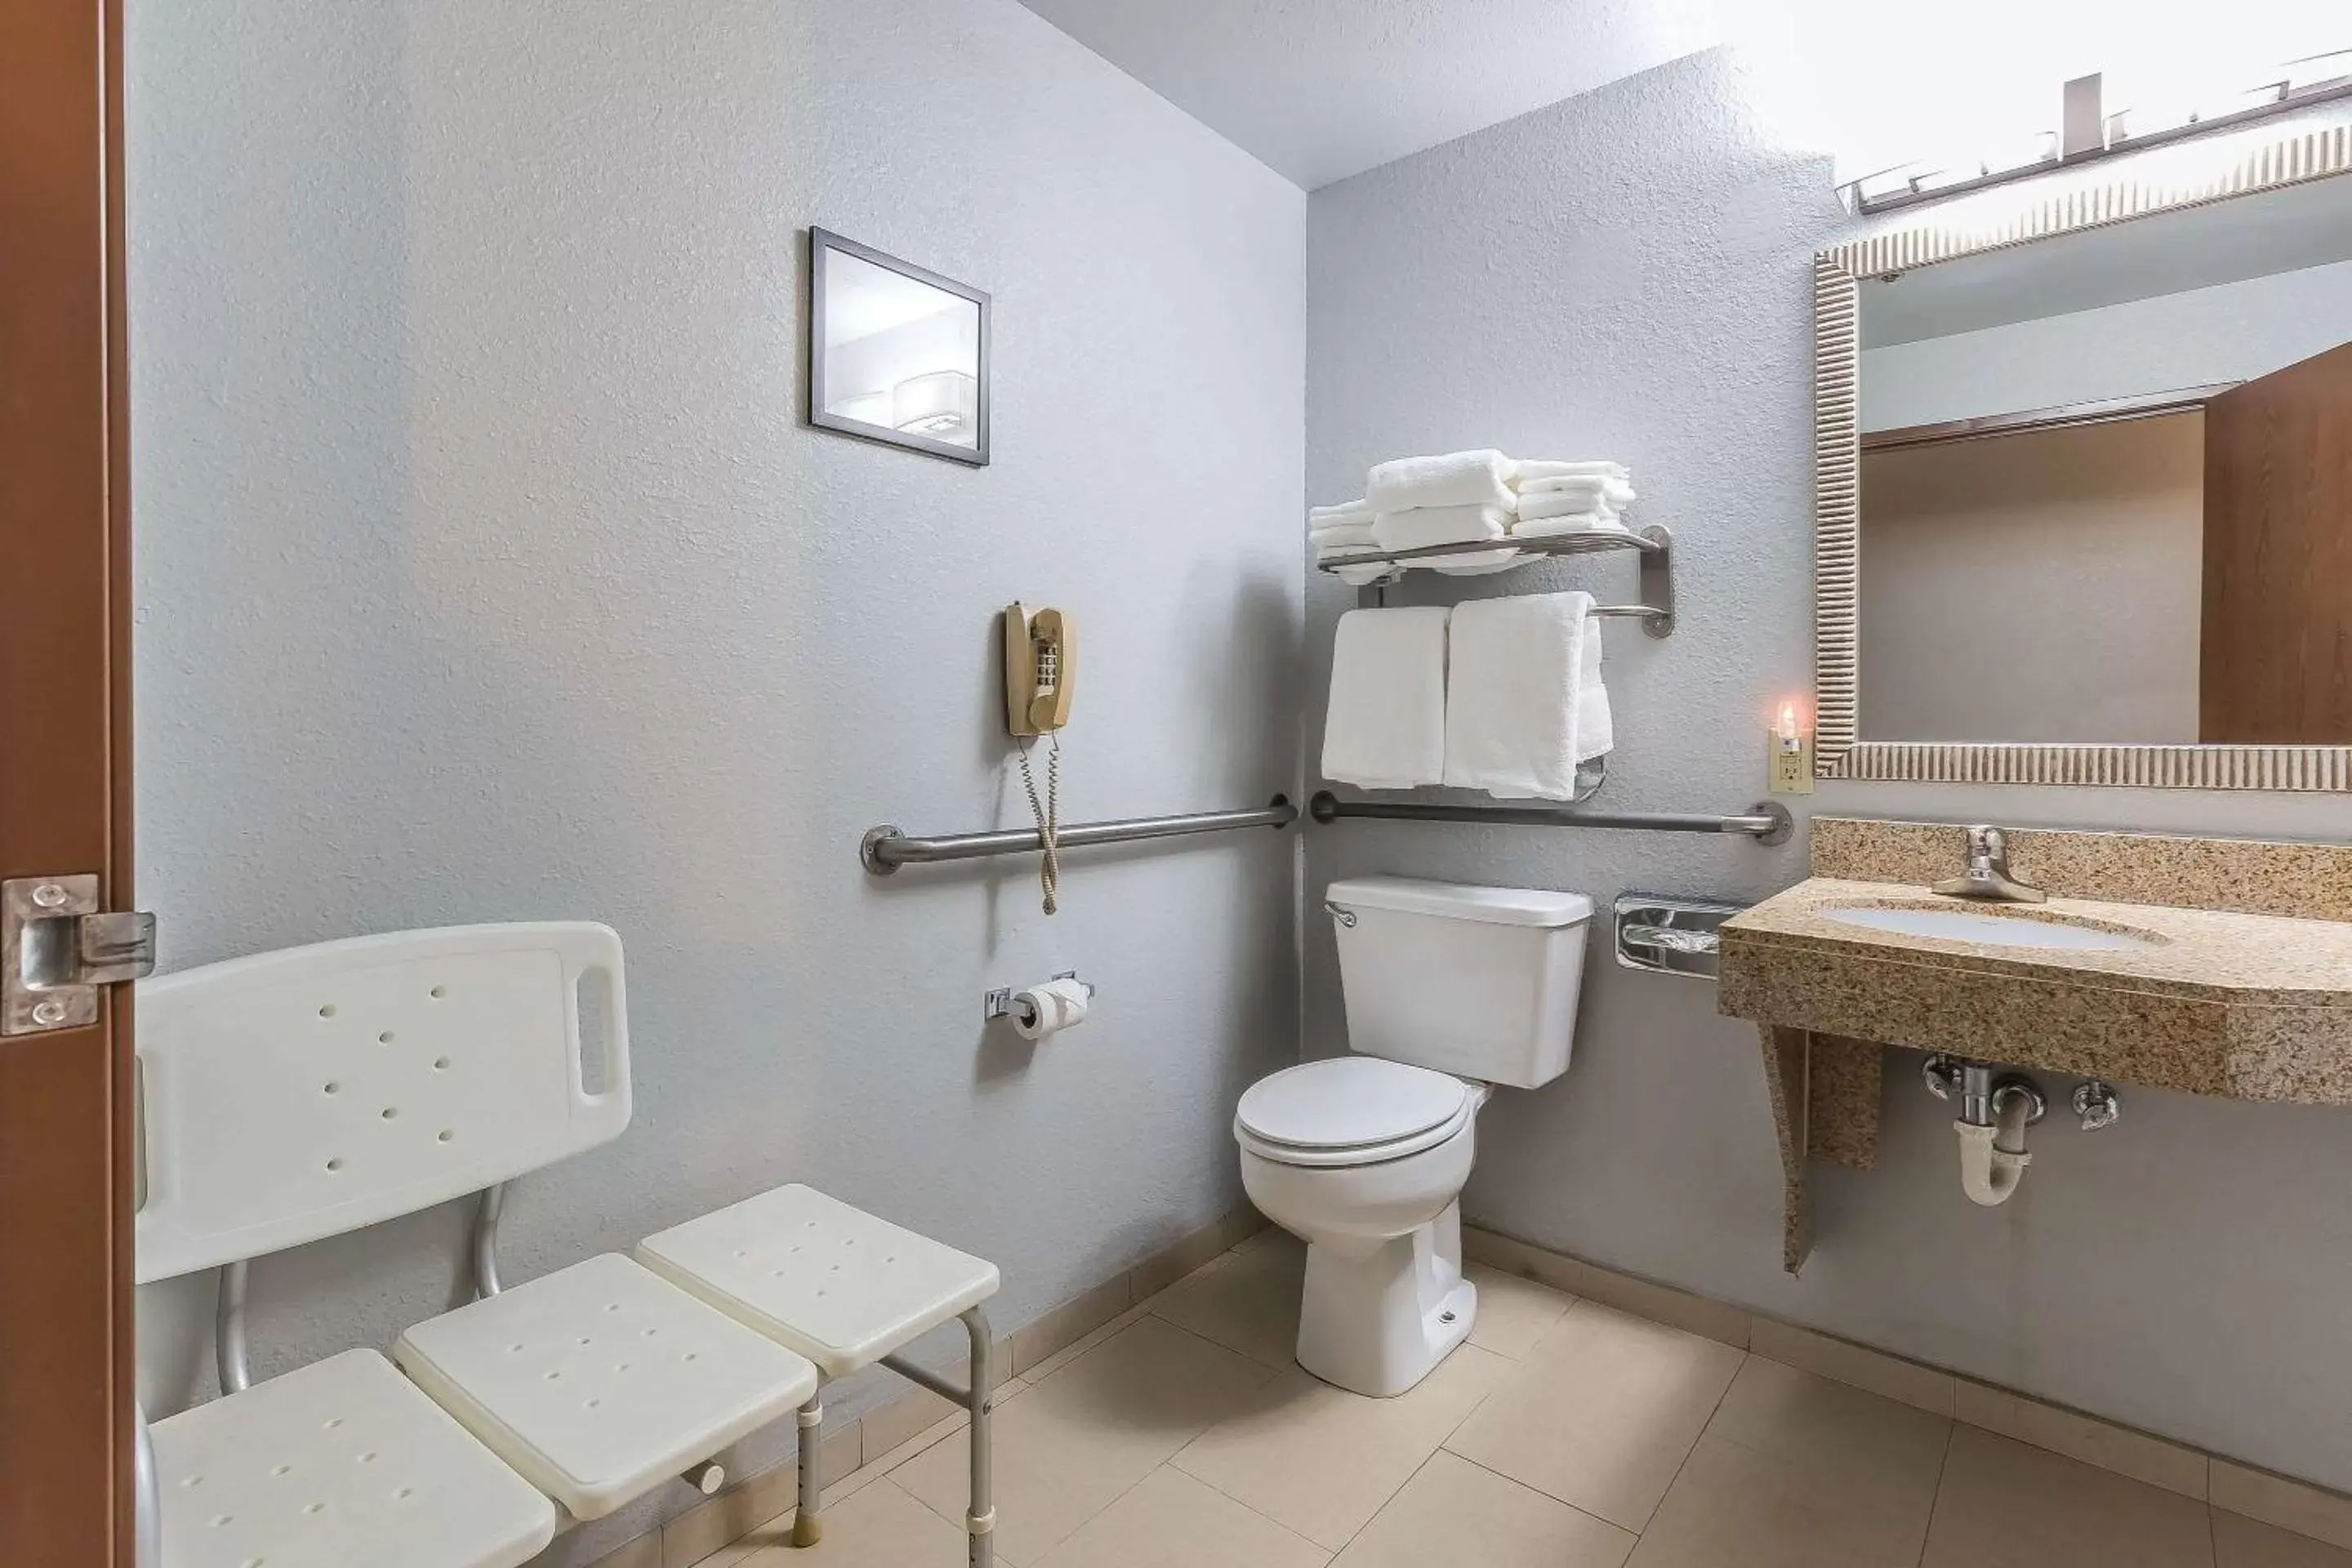 Photo of the whole room, Bathroom in Comfort Inn Alton near I-255